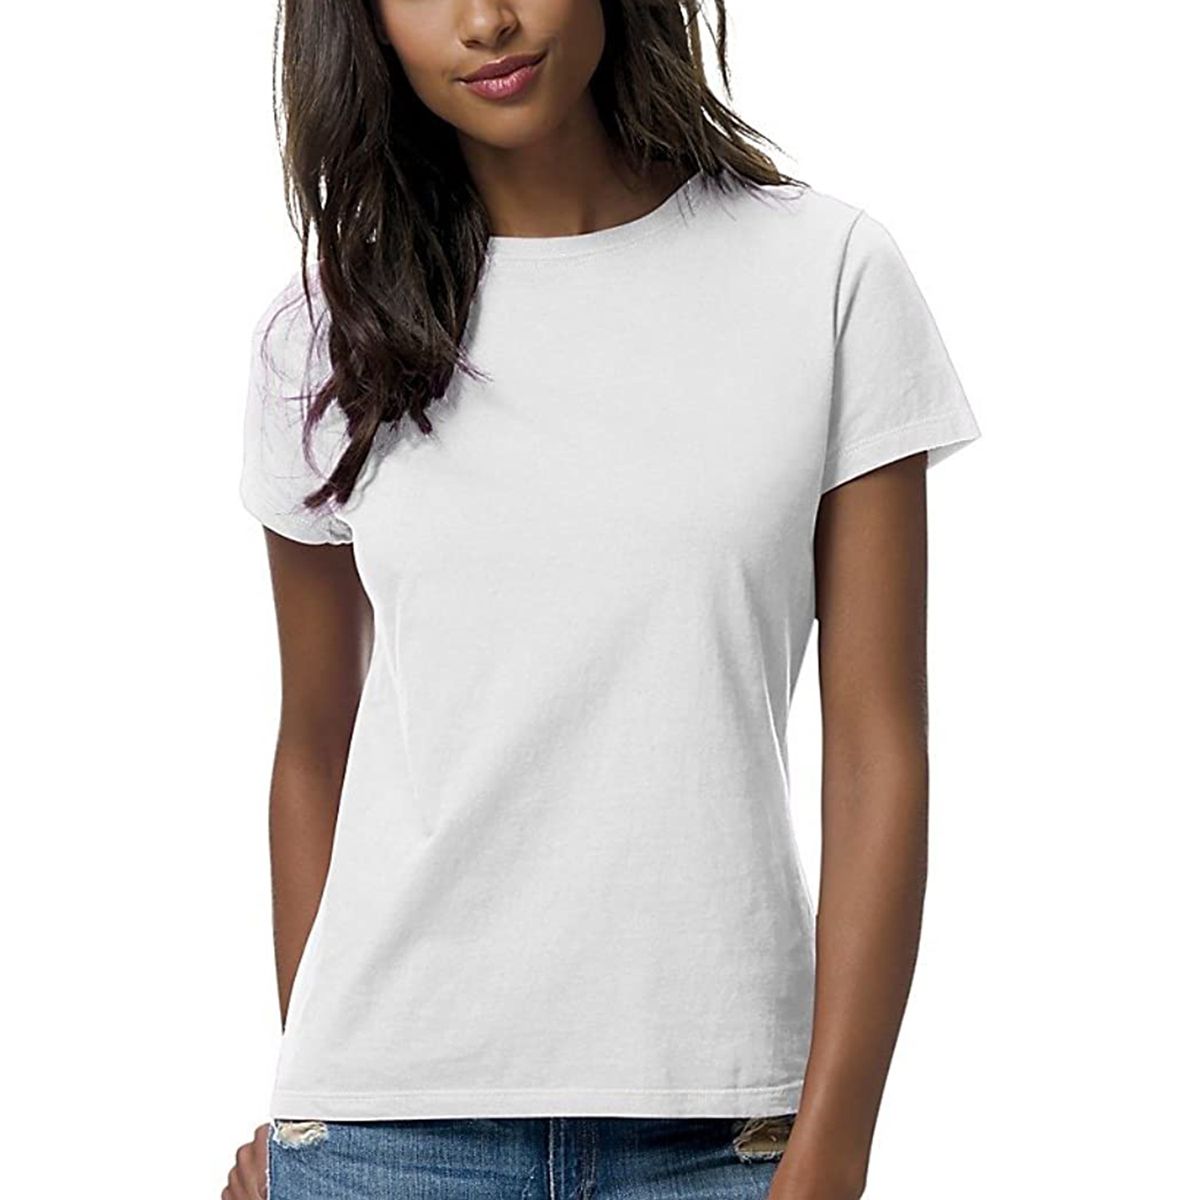 Vanbuy Womens Short Sleeve Graphic Tee Novelty Letter Print T Shirt Summer Tops